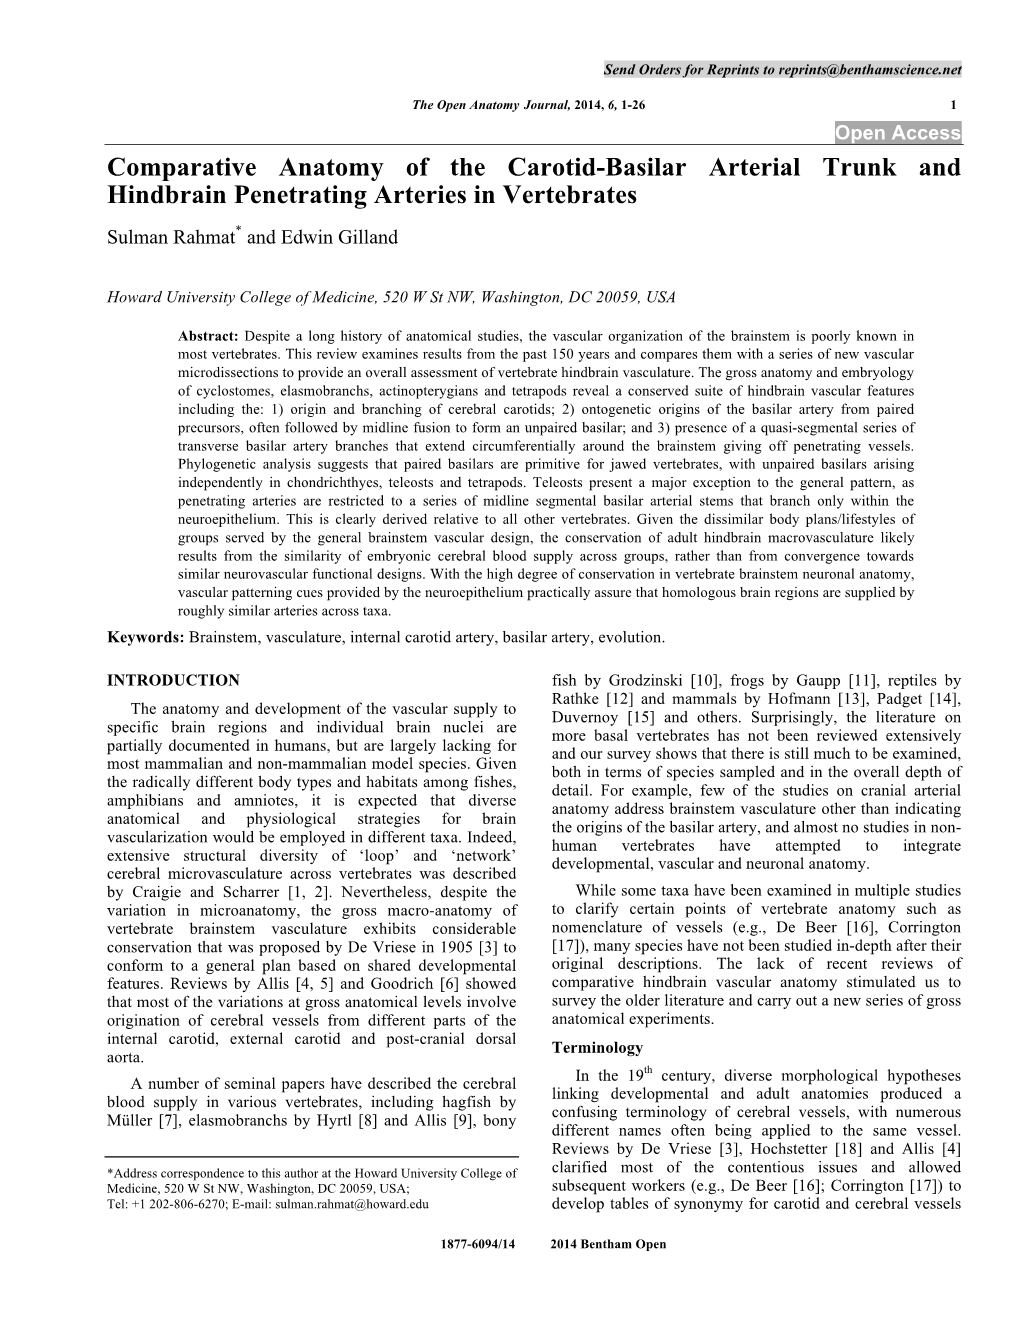 Comparative Anatomy of the Carotid-Basilar Arterial Trunk and Hindbrain Penetrating Arteries in Vertebrates Sulman Rahmat* and Edwin Gilland